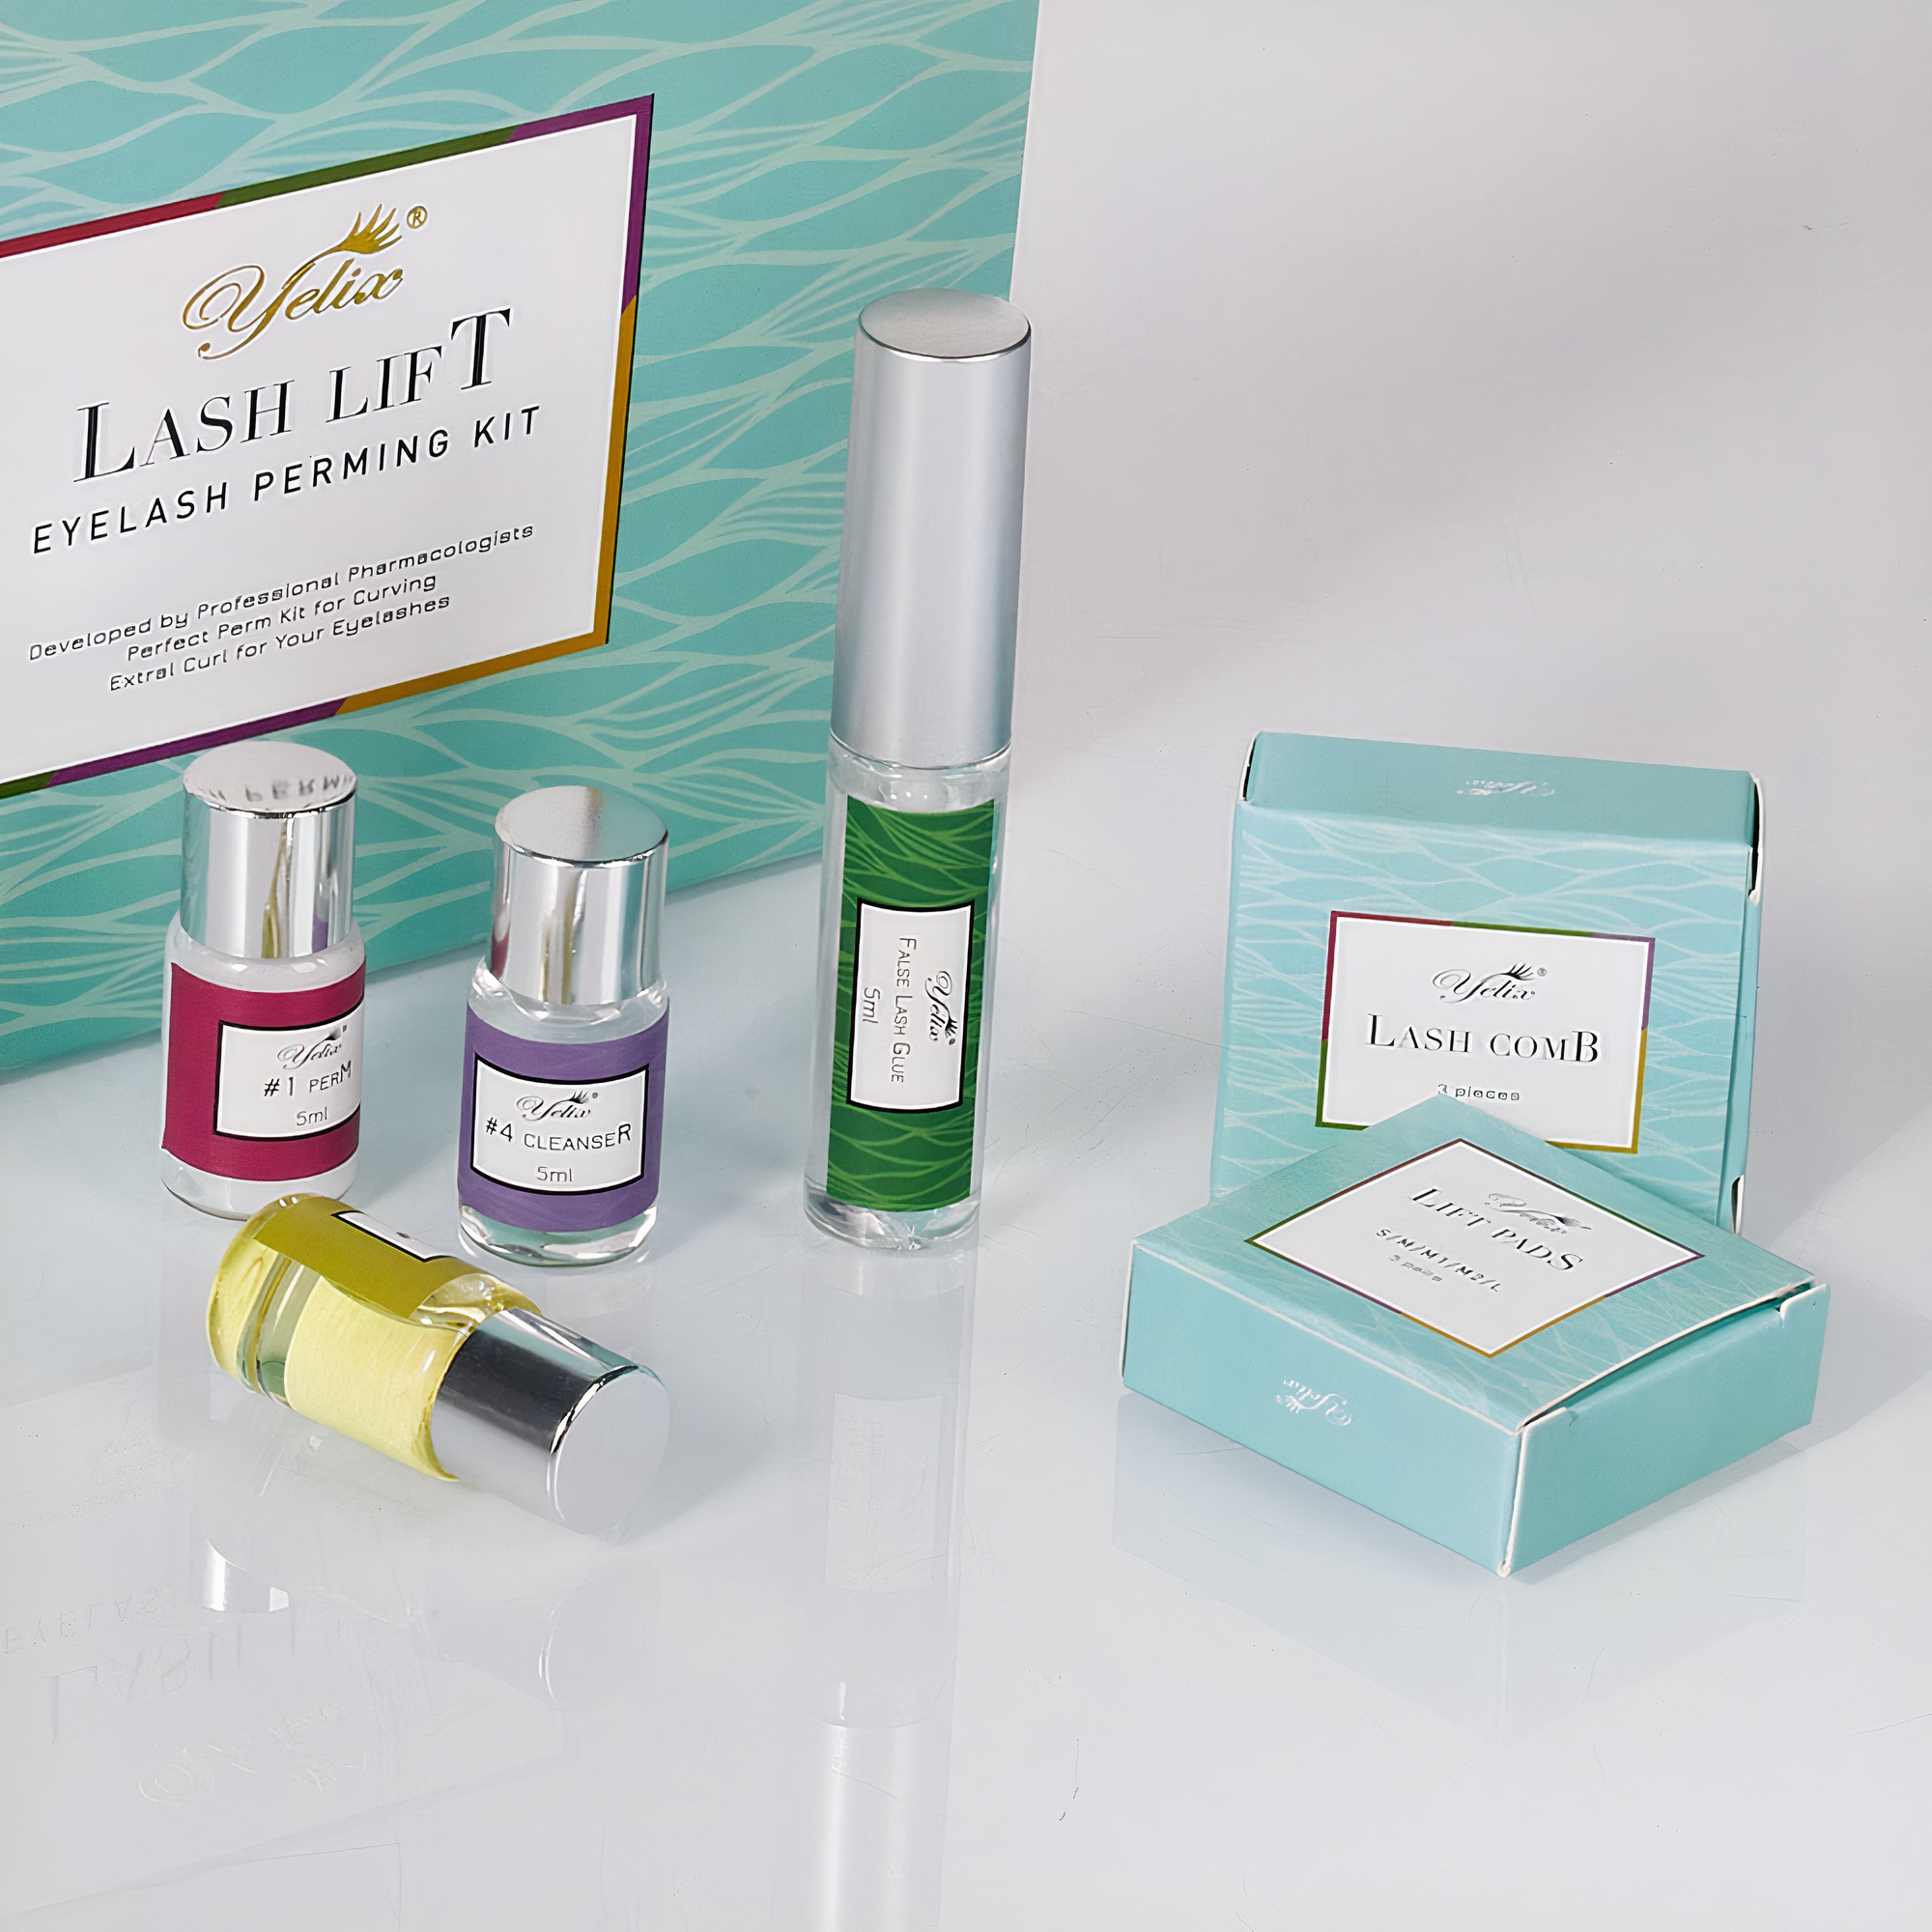 BLISS Professional Lash Lift Kit™ 35% OFF - BLISS & ME Beauty